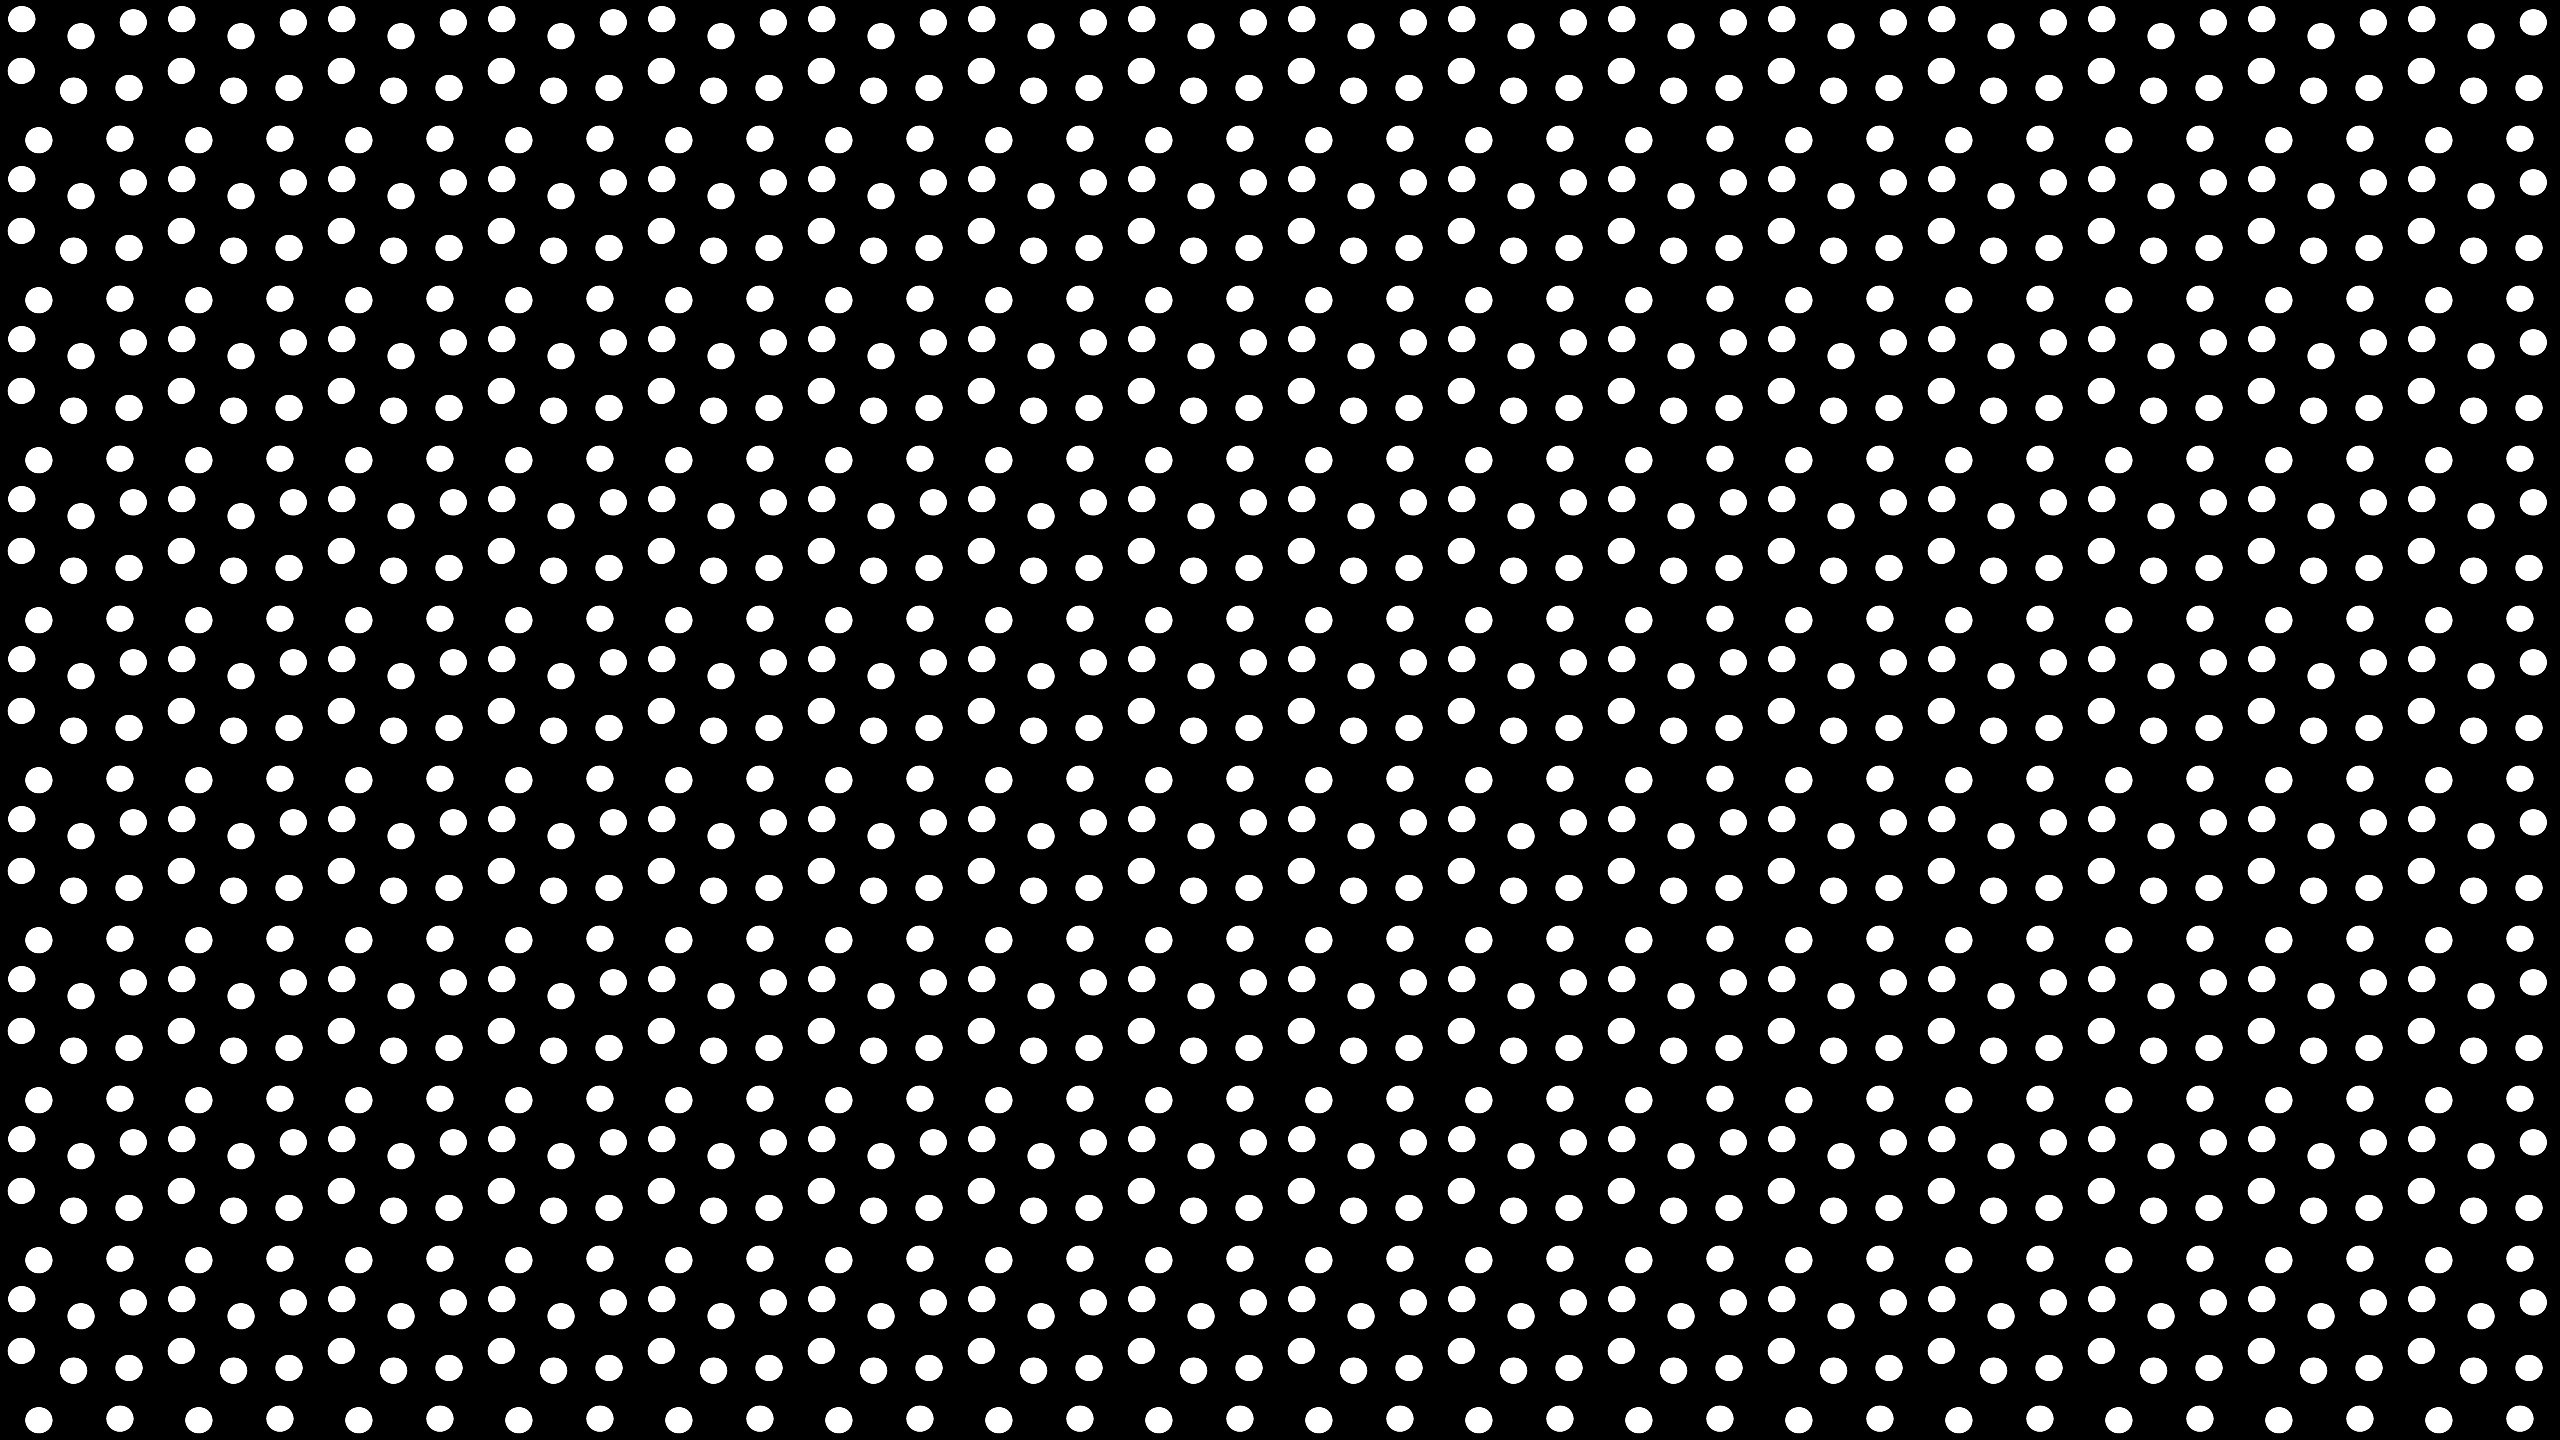 Polka Dot wallpaper ·① Download free cool High Resolution wallpapers